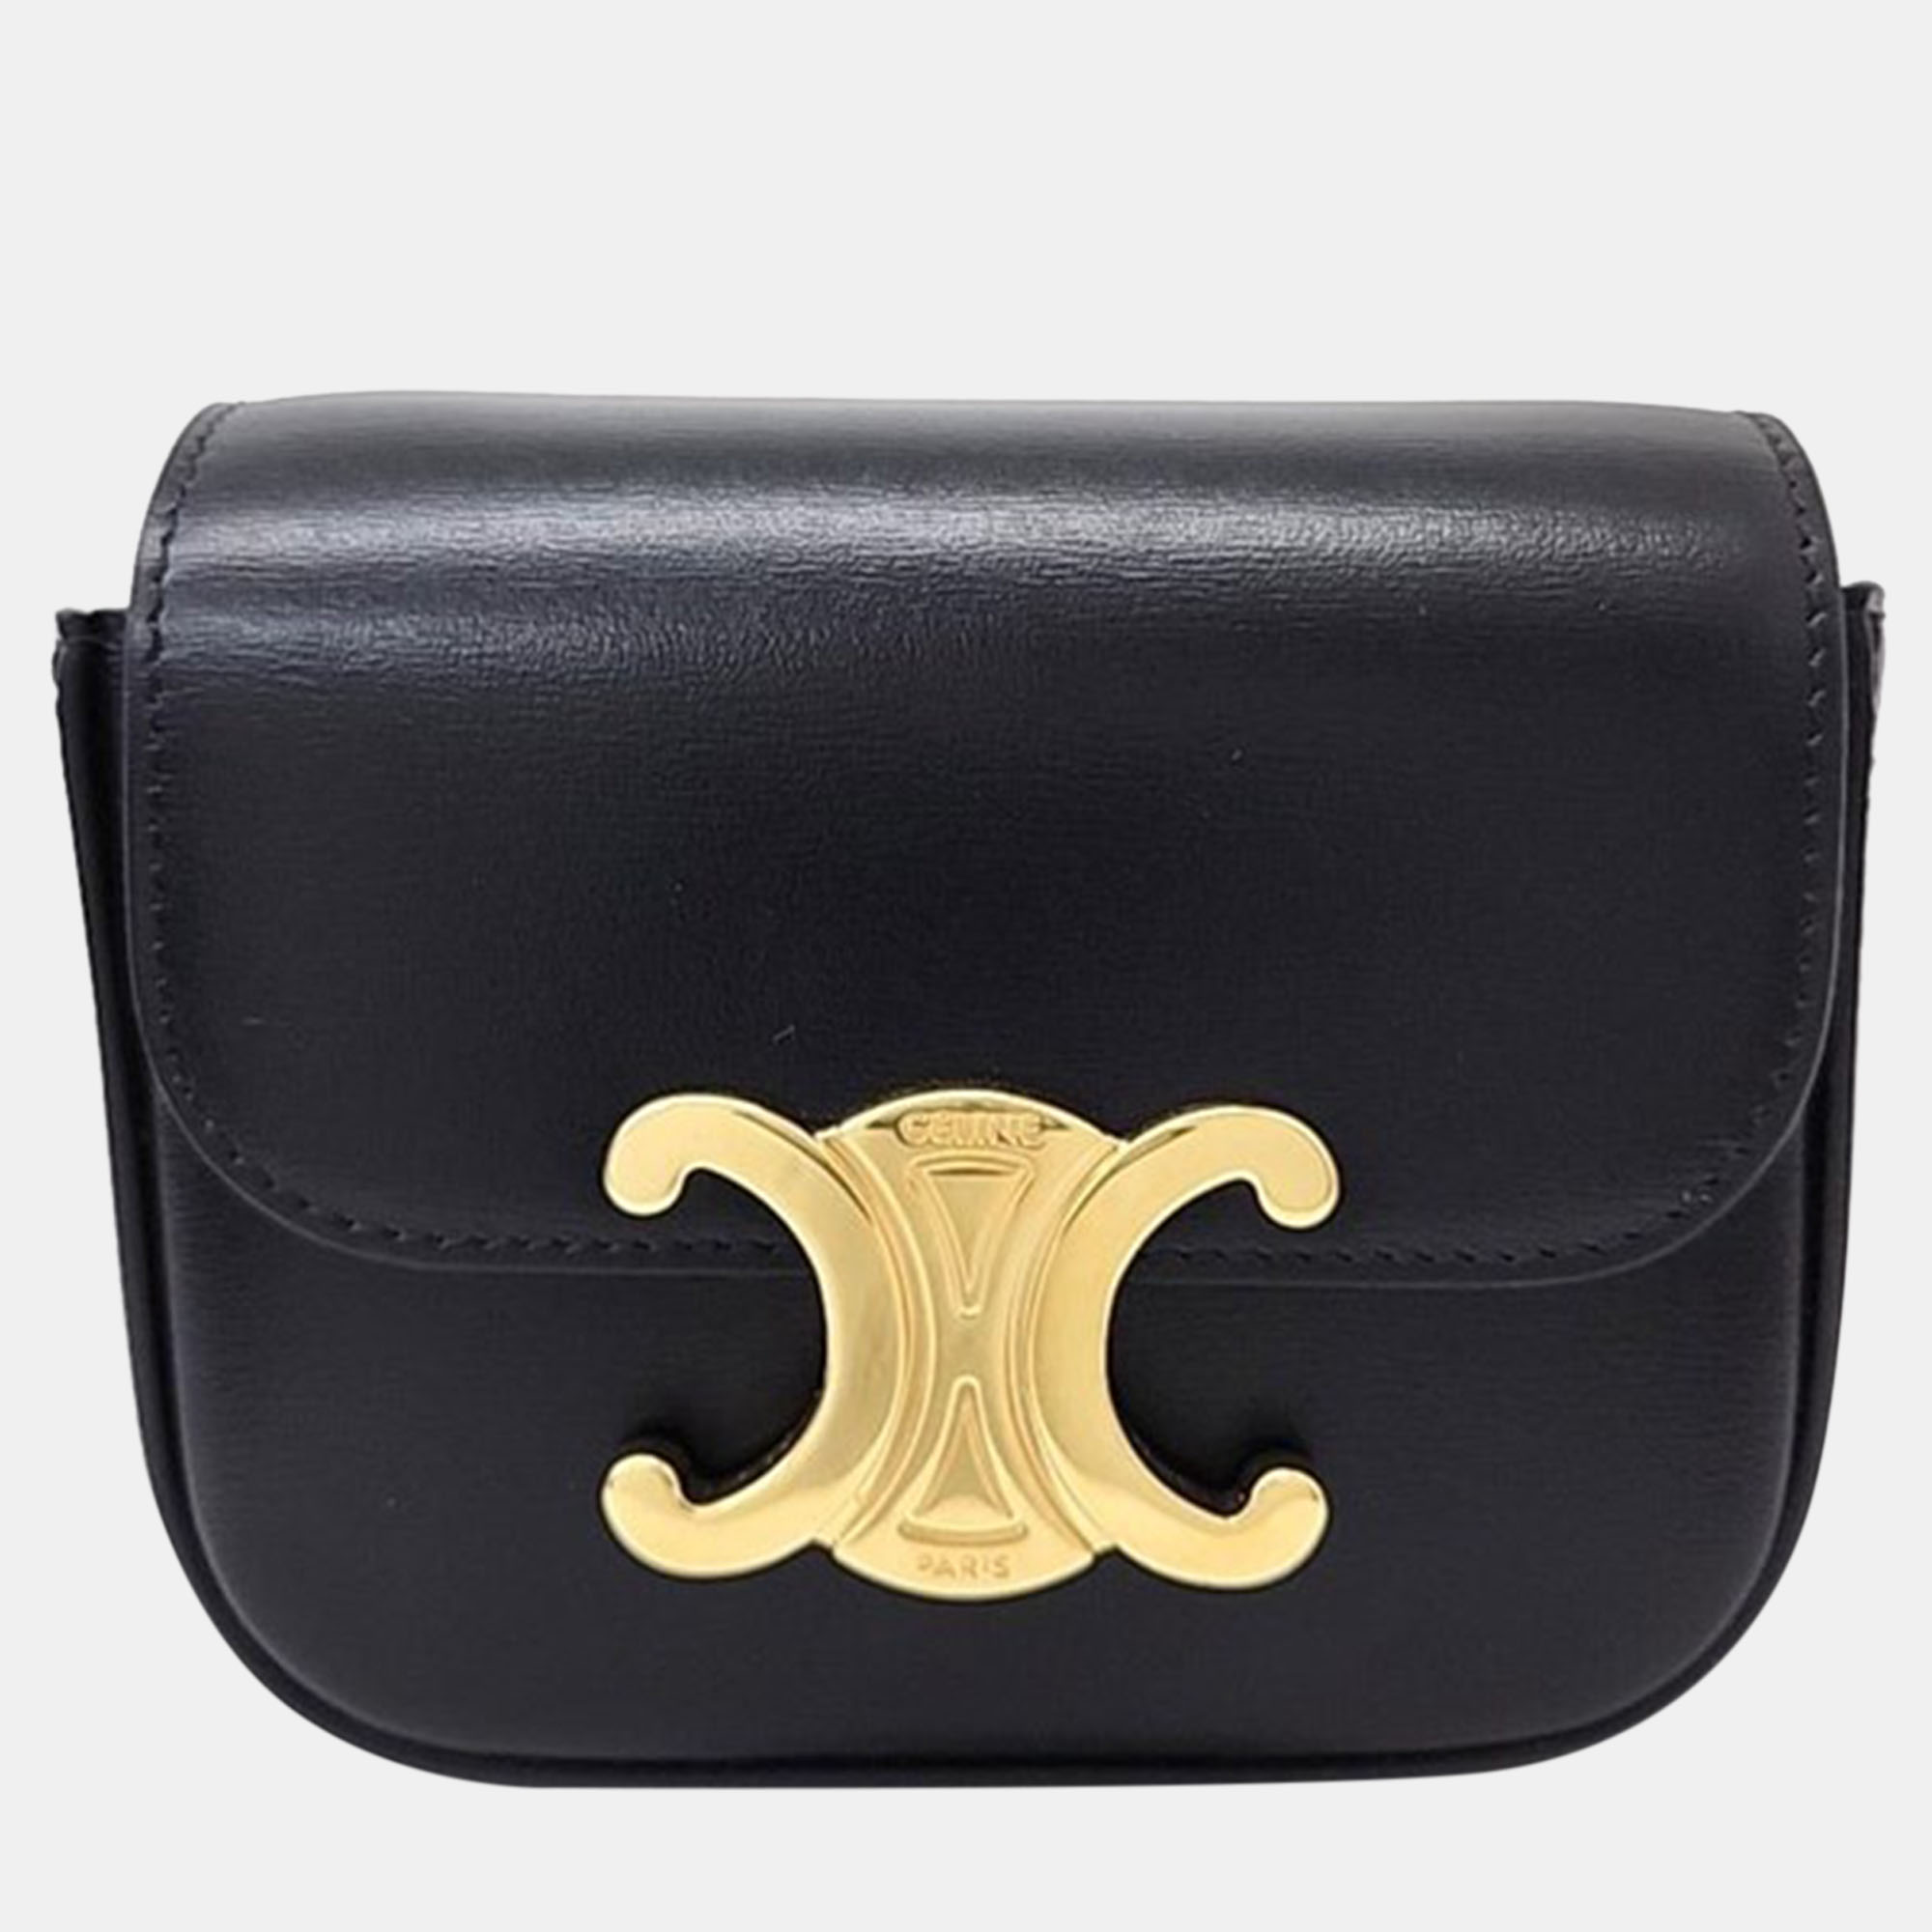 Celine black leather triumph mini crossbdoy bag